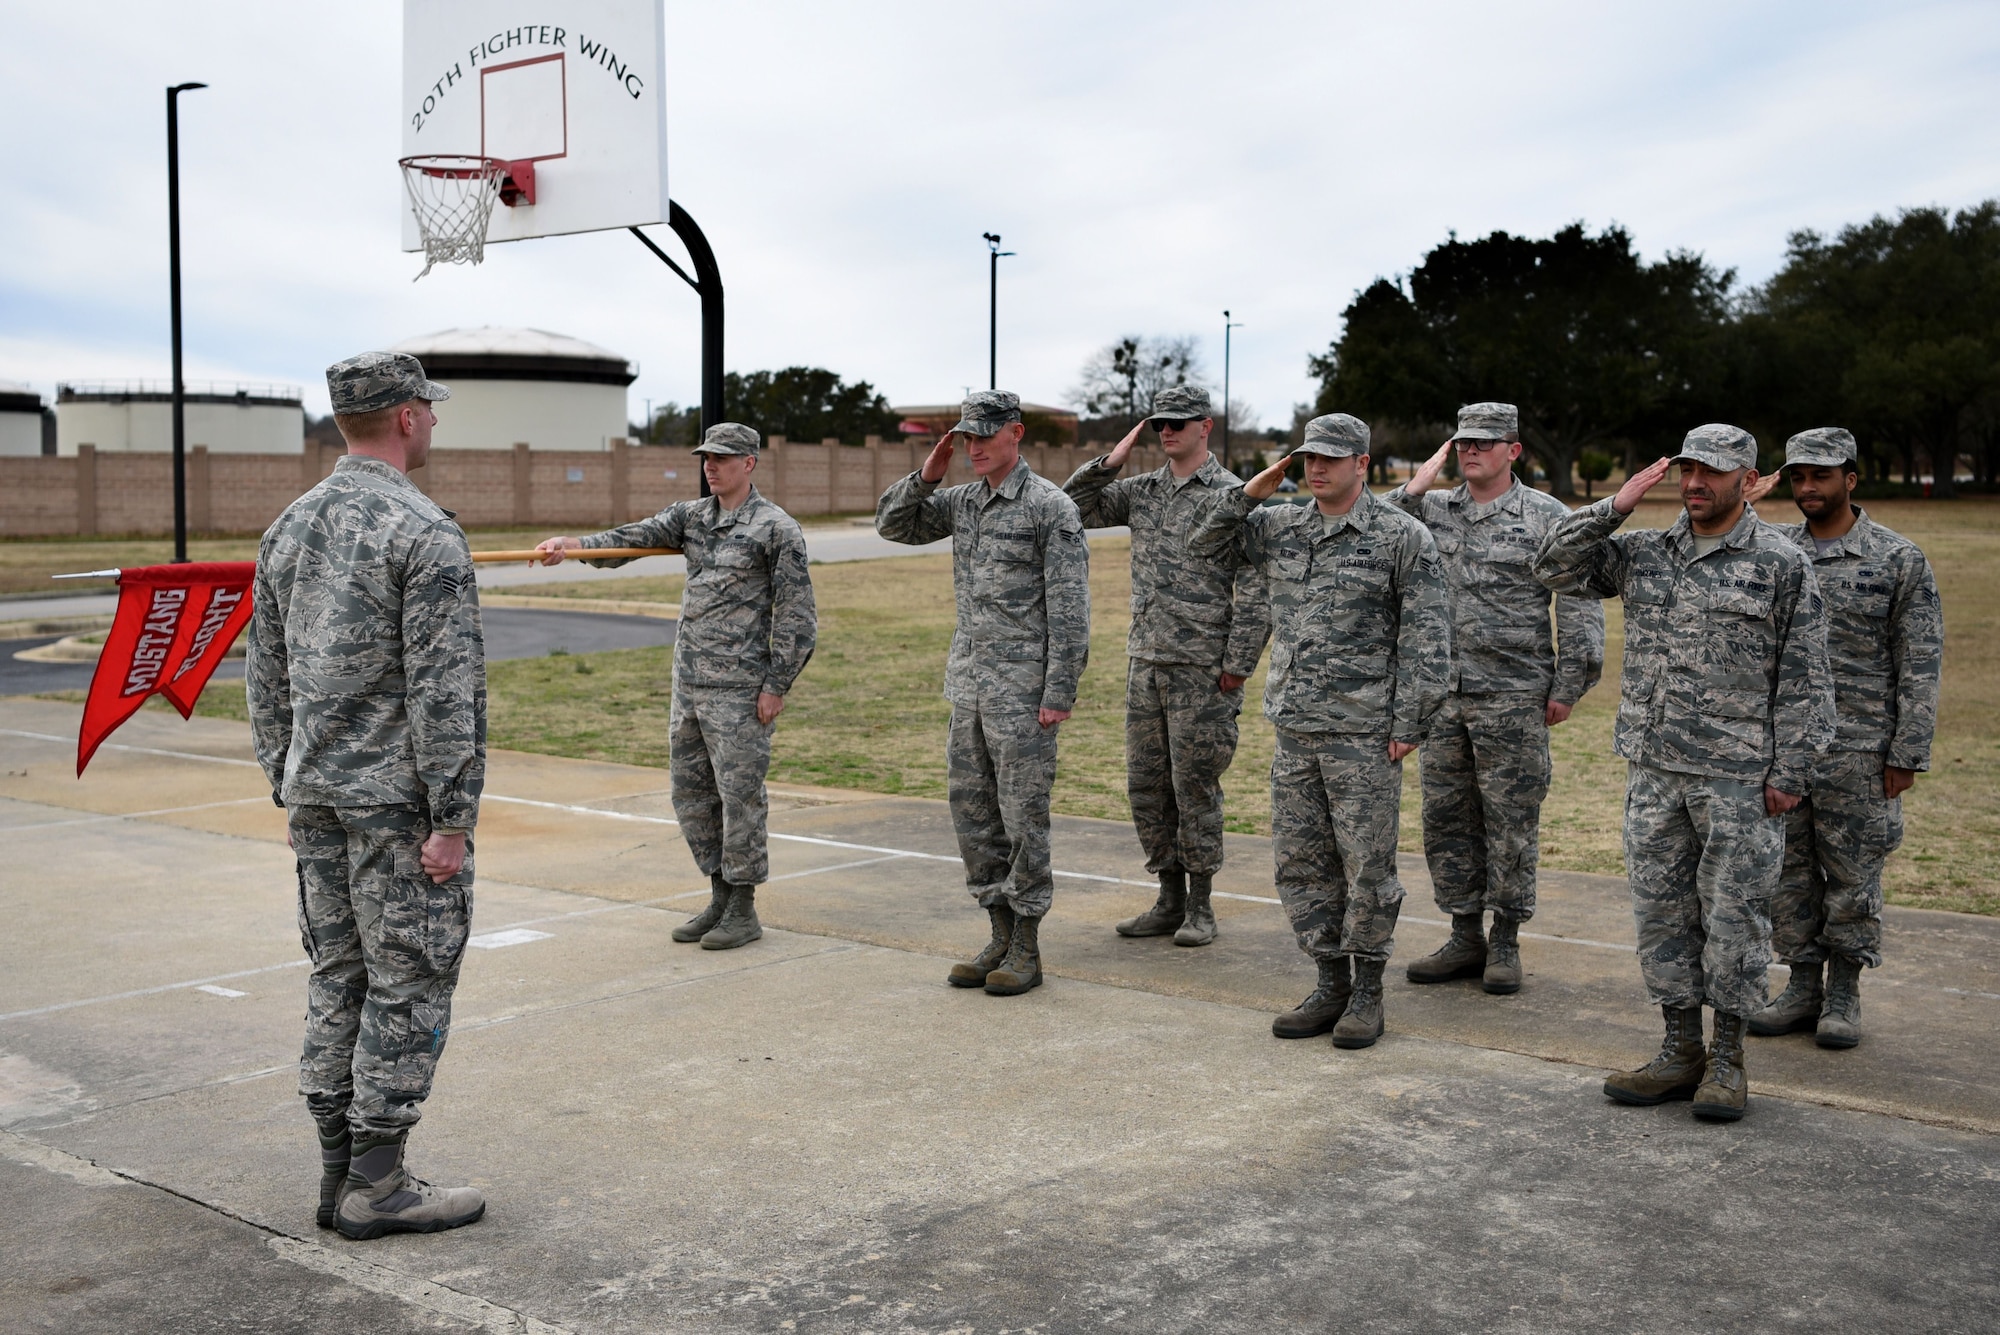 Senior Master Sgt. David B. Reid Airman Leadership School (ALS) students perform drill movements at Shaw Air Force Base, S.C., Feb. 2, 2018.